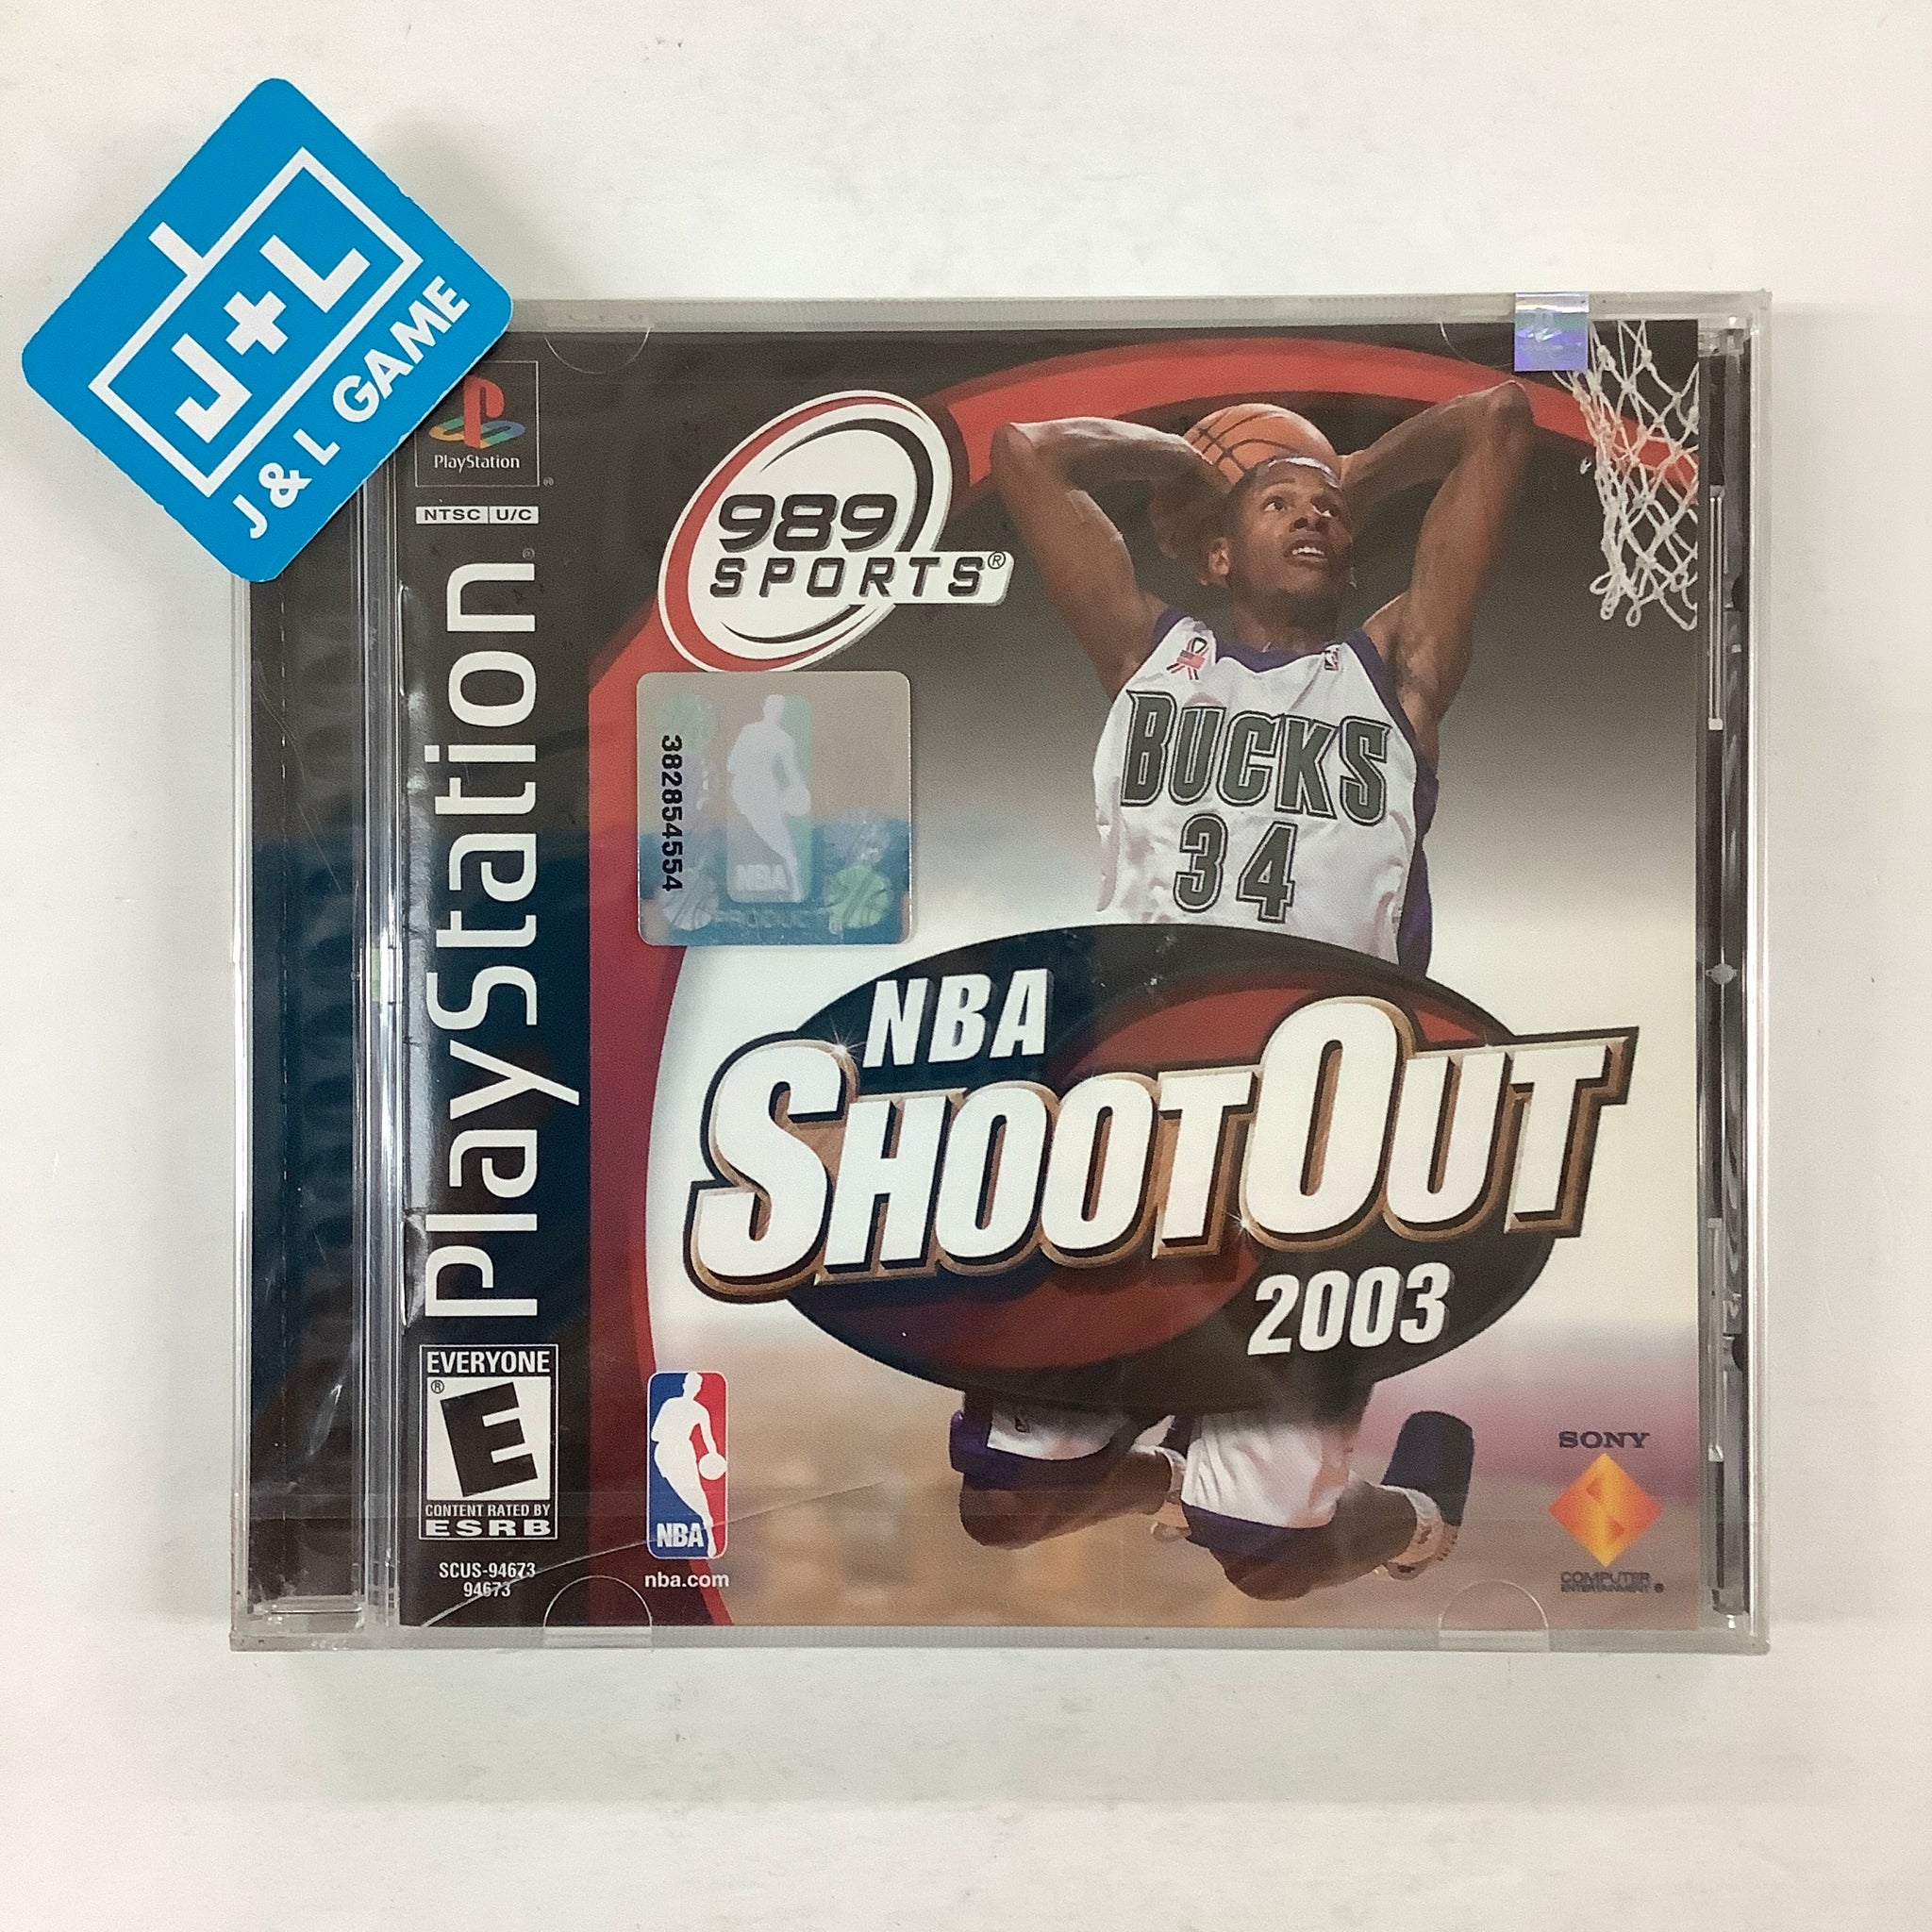 NBA ShootOut 2003 - (PS1) PlayStation 1 Video Games 989 Studios   